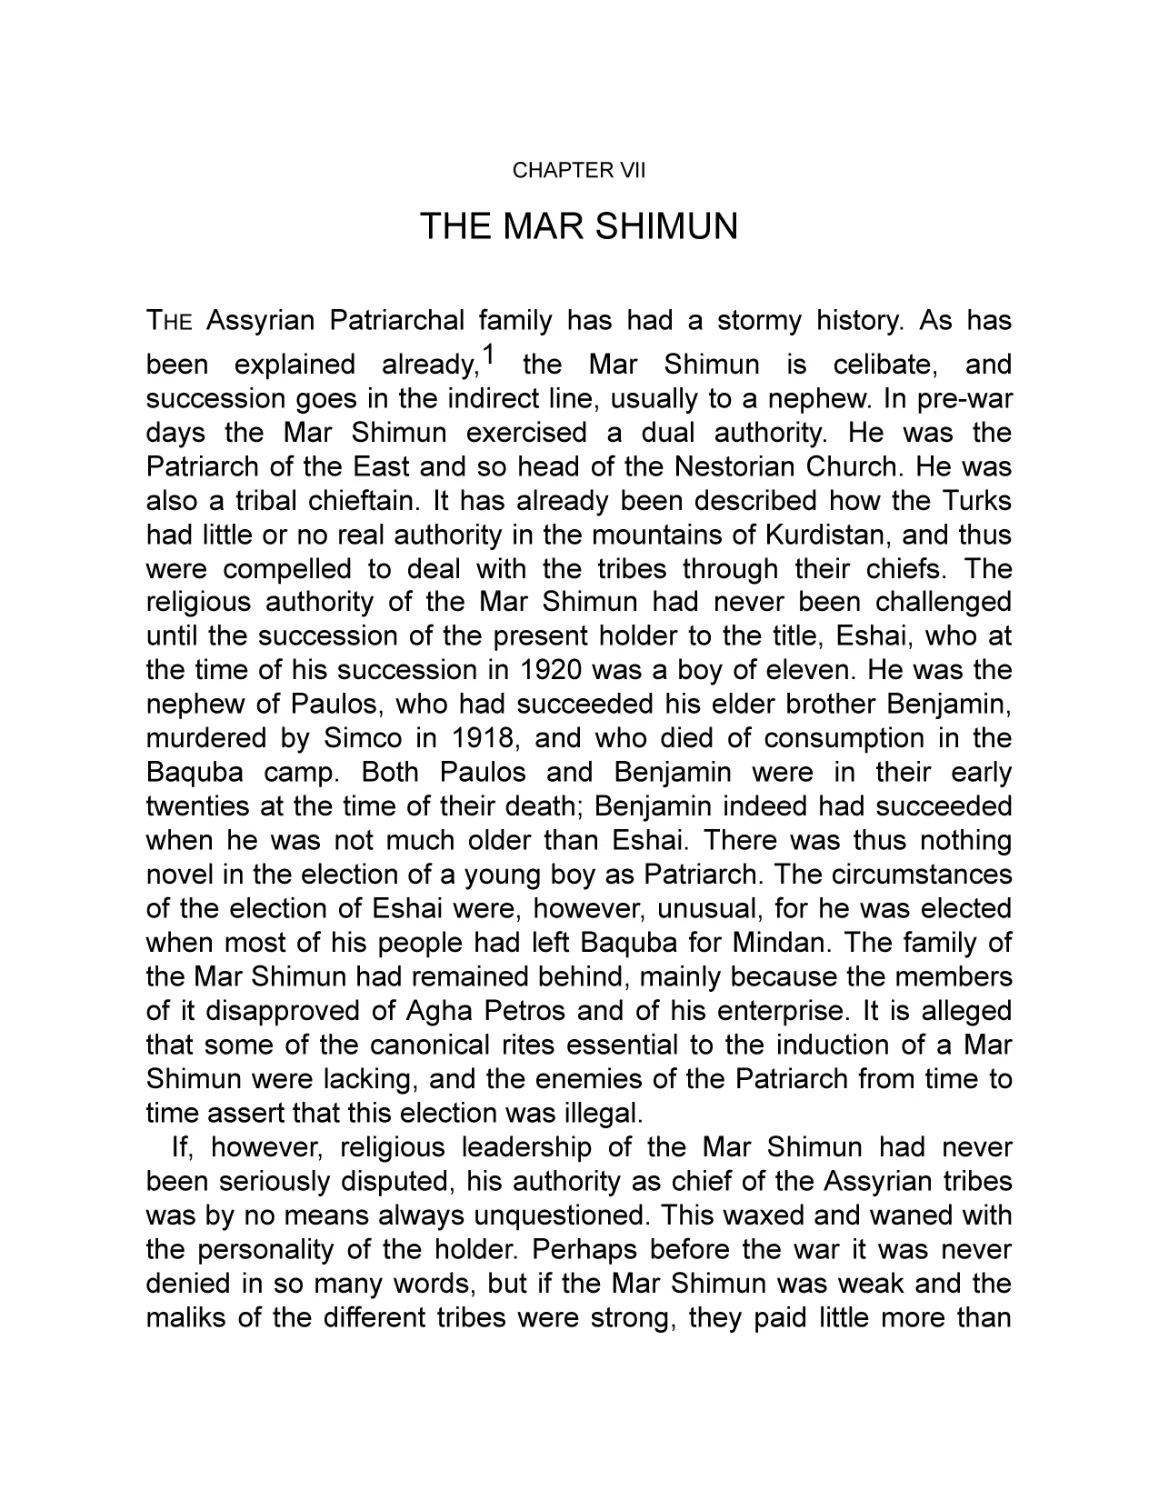 VII The Mar Shimun